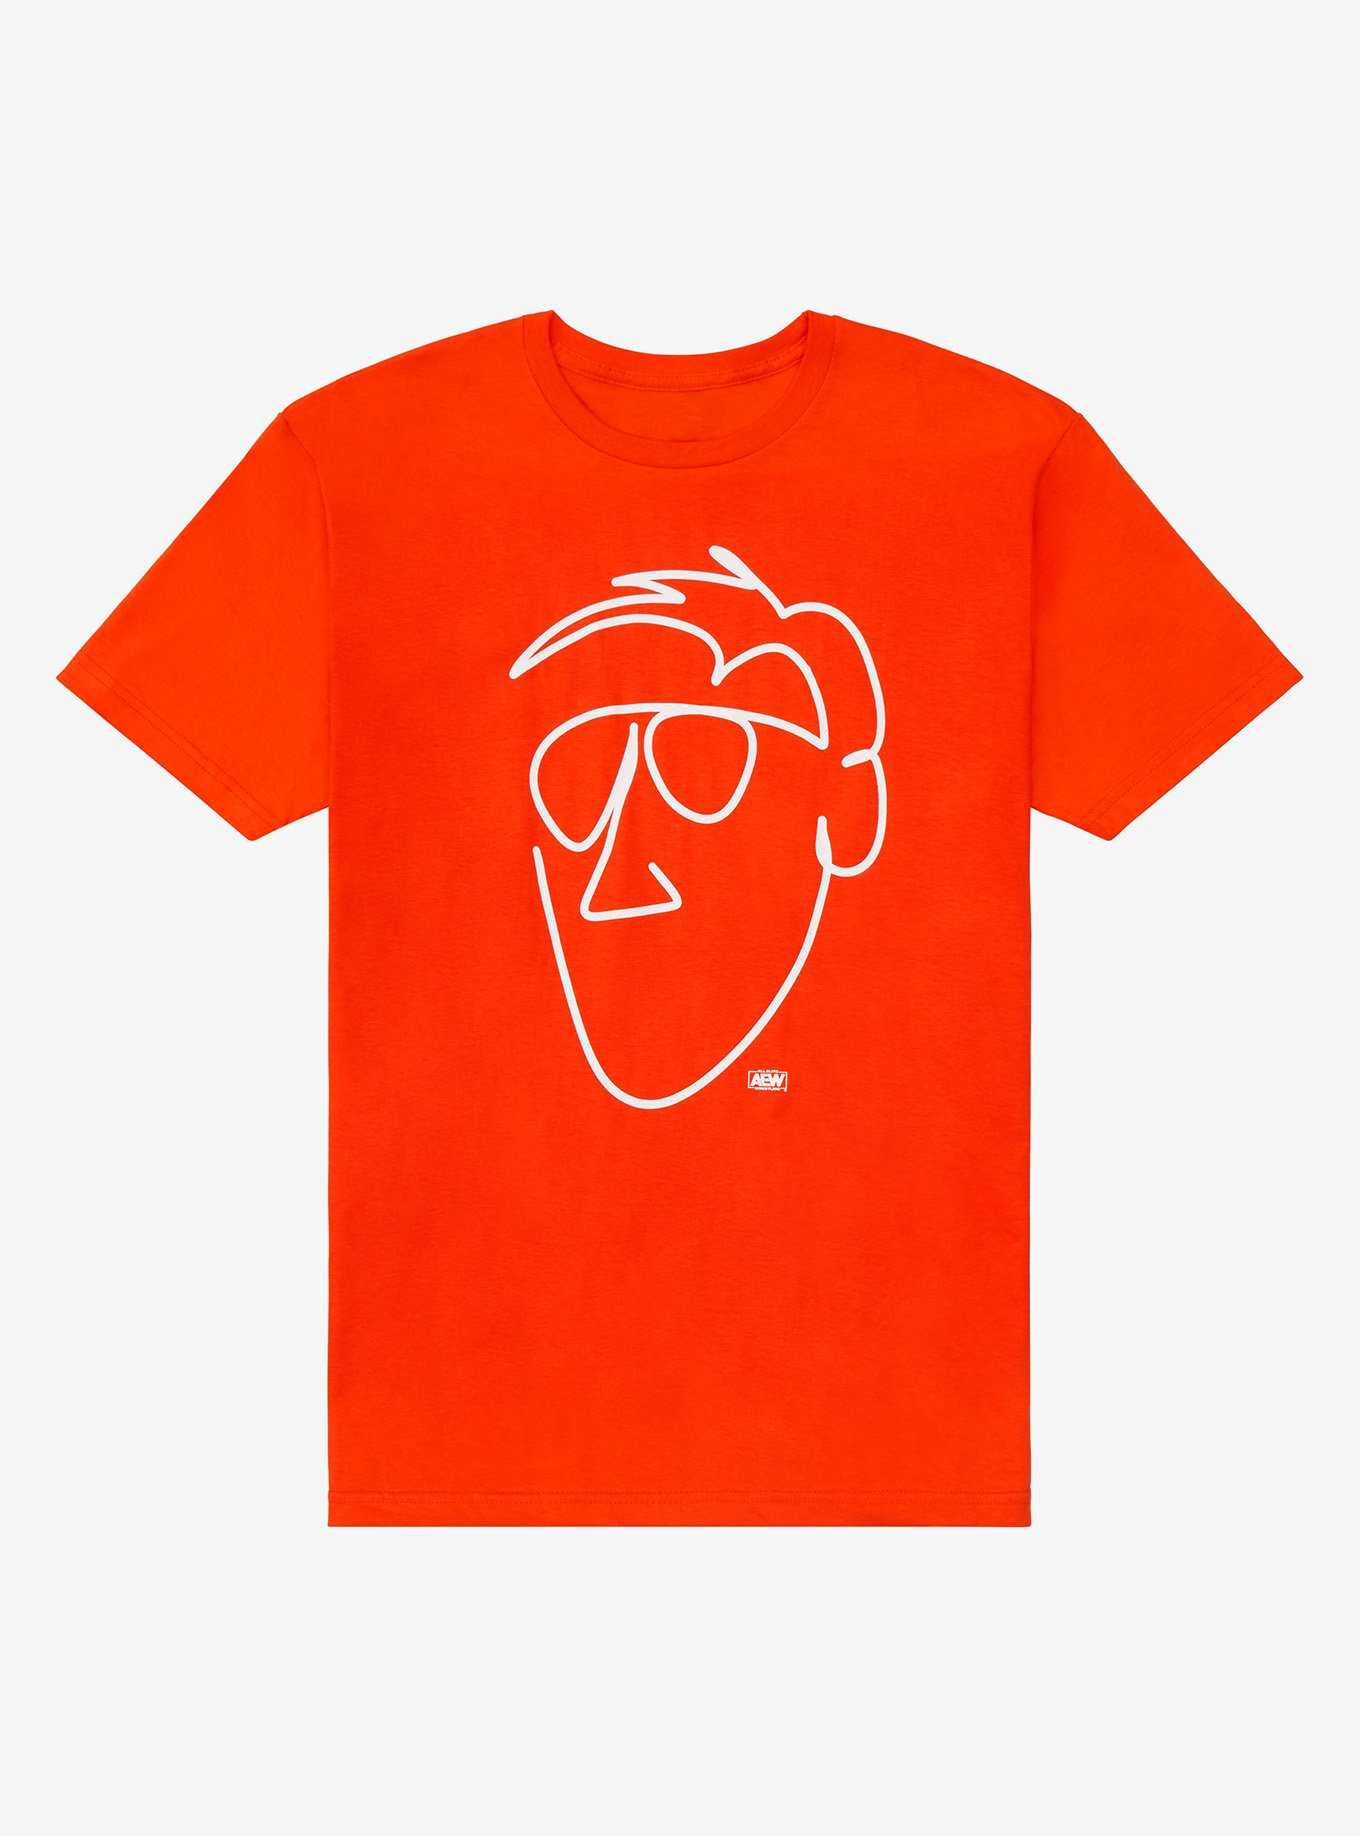 Orangetheory Hell Week October 2020 Classic Men's T Shirt - Inktee